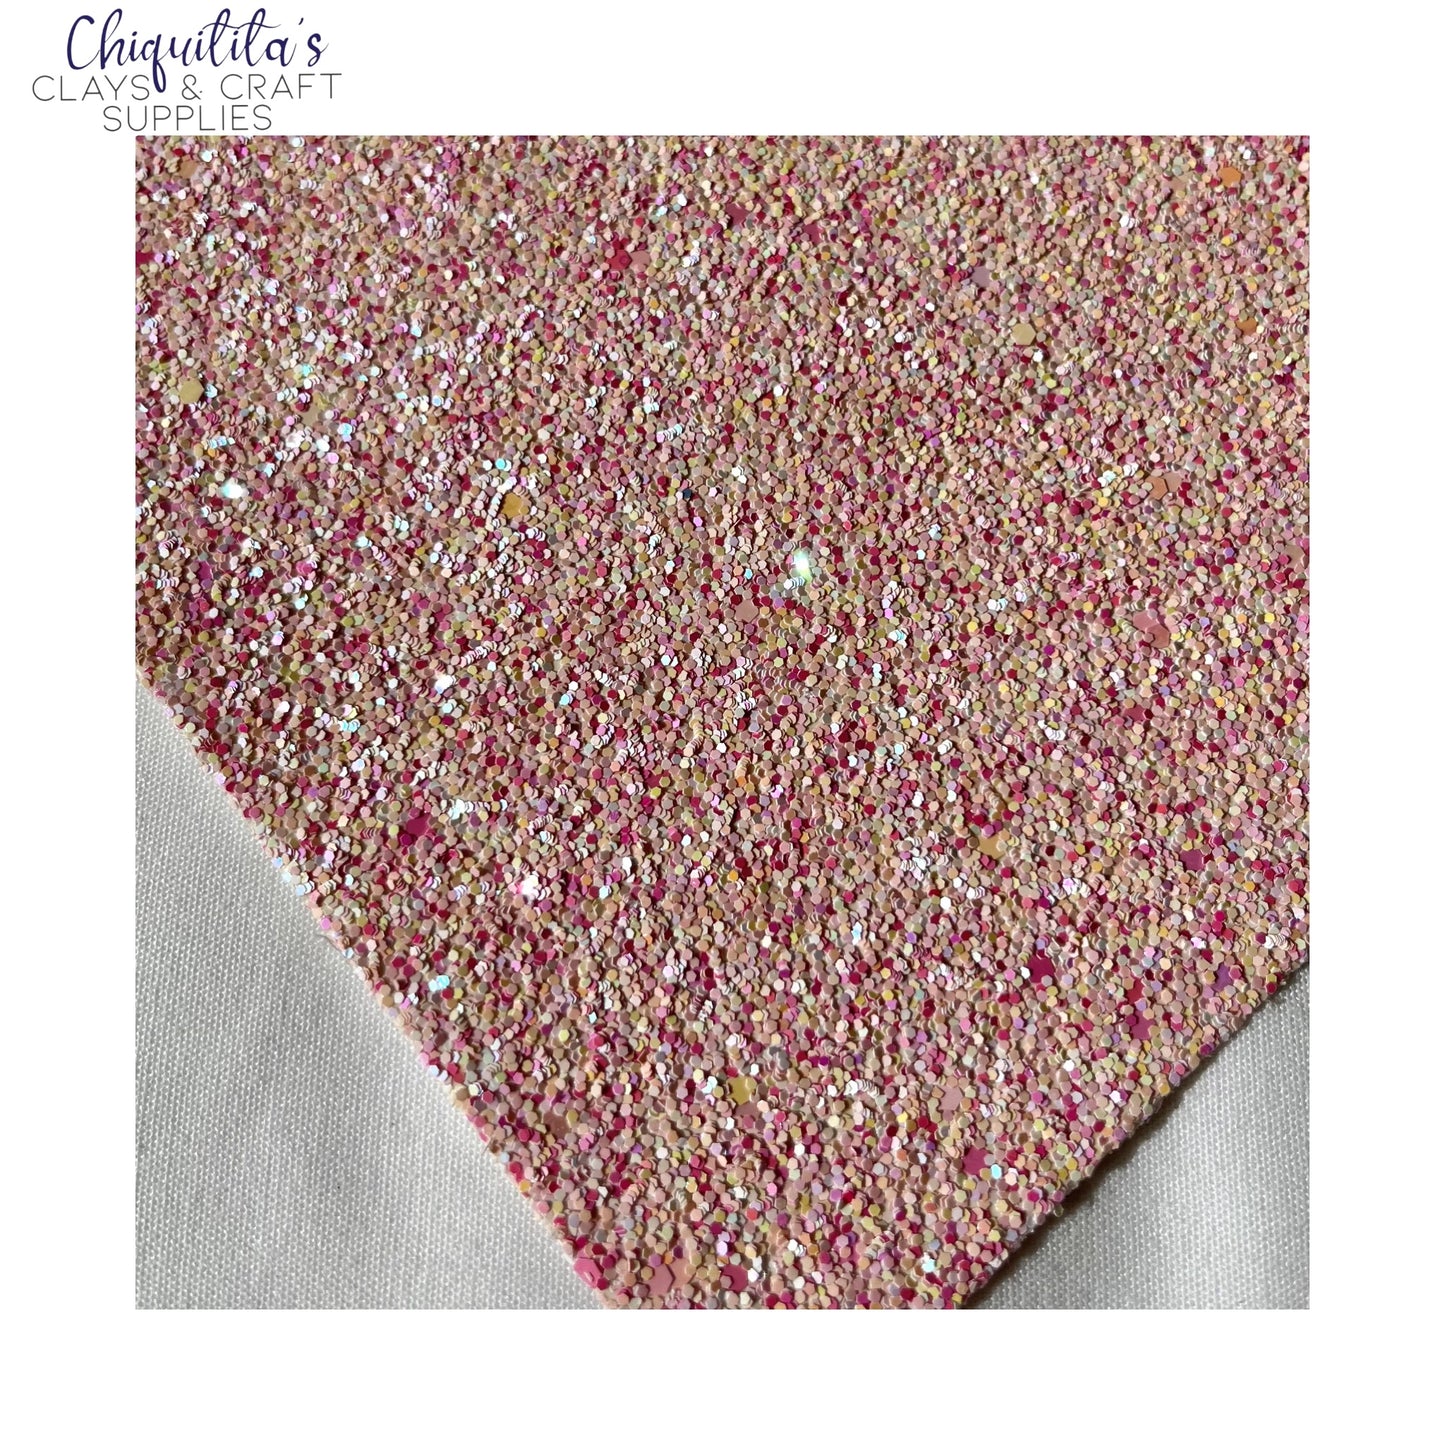 Bow Craft Supplies: Blush Pink - Fine Glitter Sheet